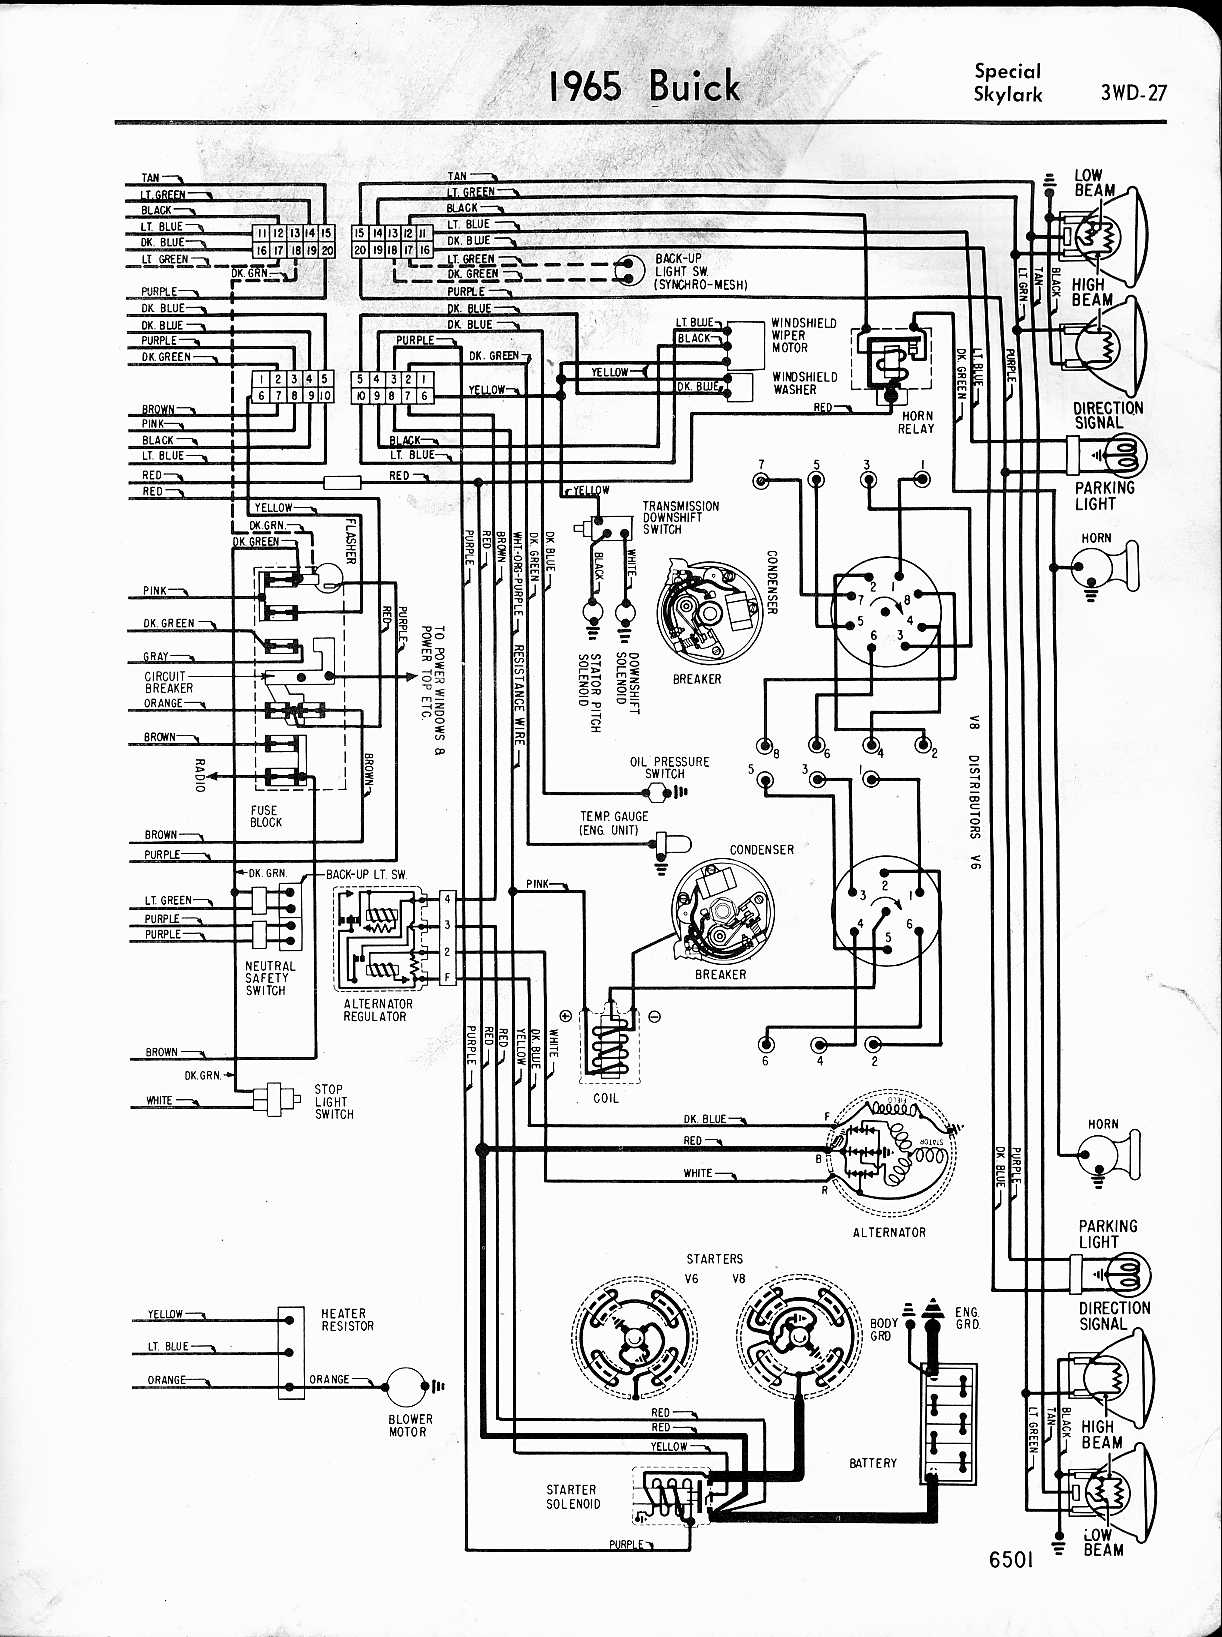 Buick Wiring Diagrams: 1957-1965 wiring diagram buick wildcat 